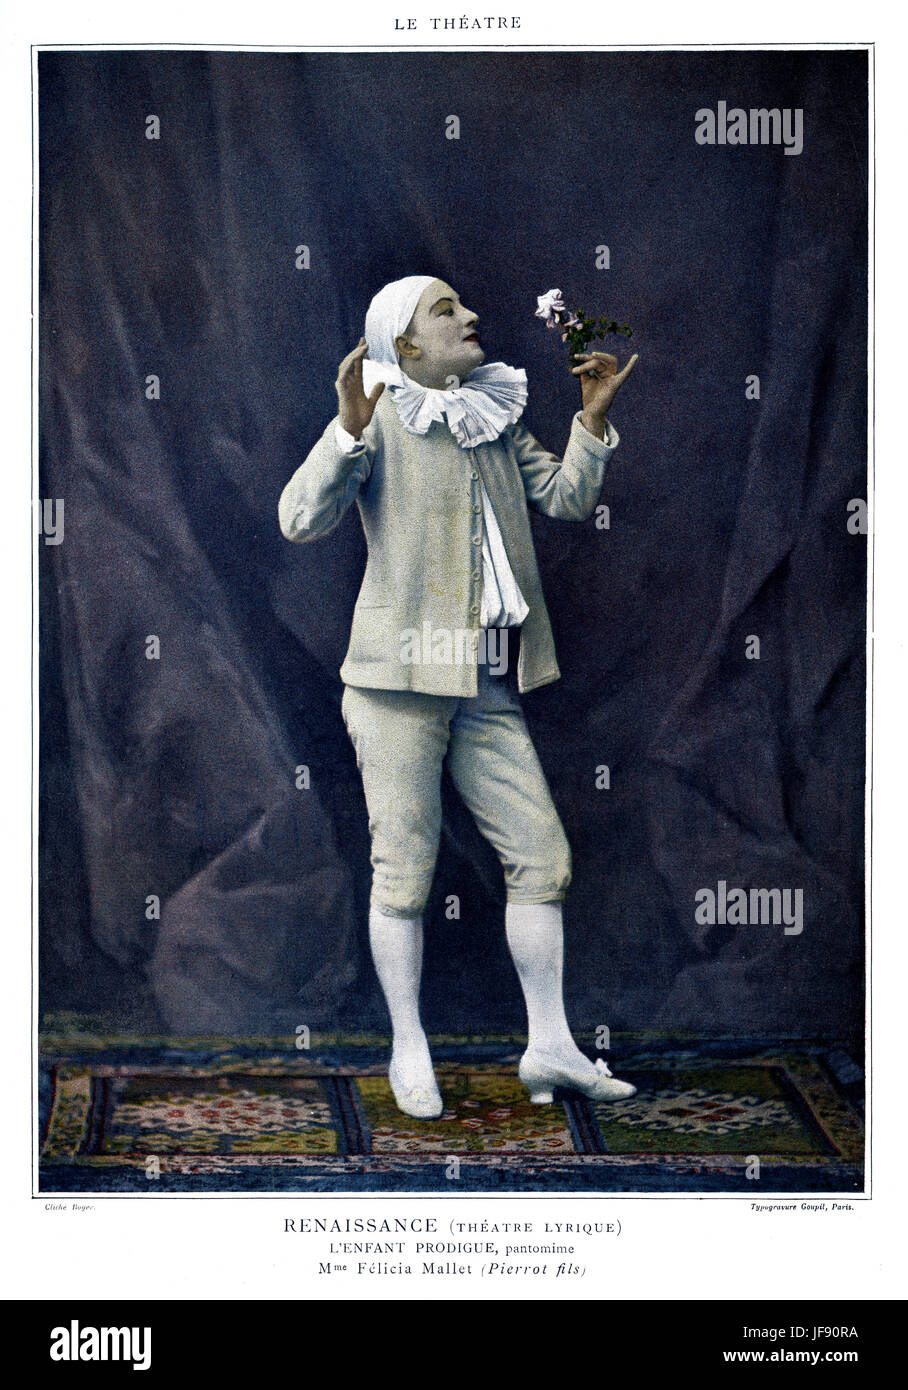 Felicia Mallet as Pierrot fils in L'enfant Prodigue, pantomime, 1899 production Stock Photo